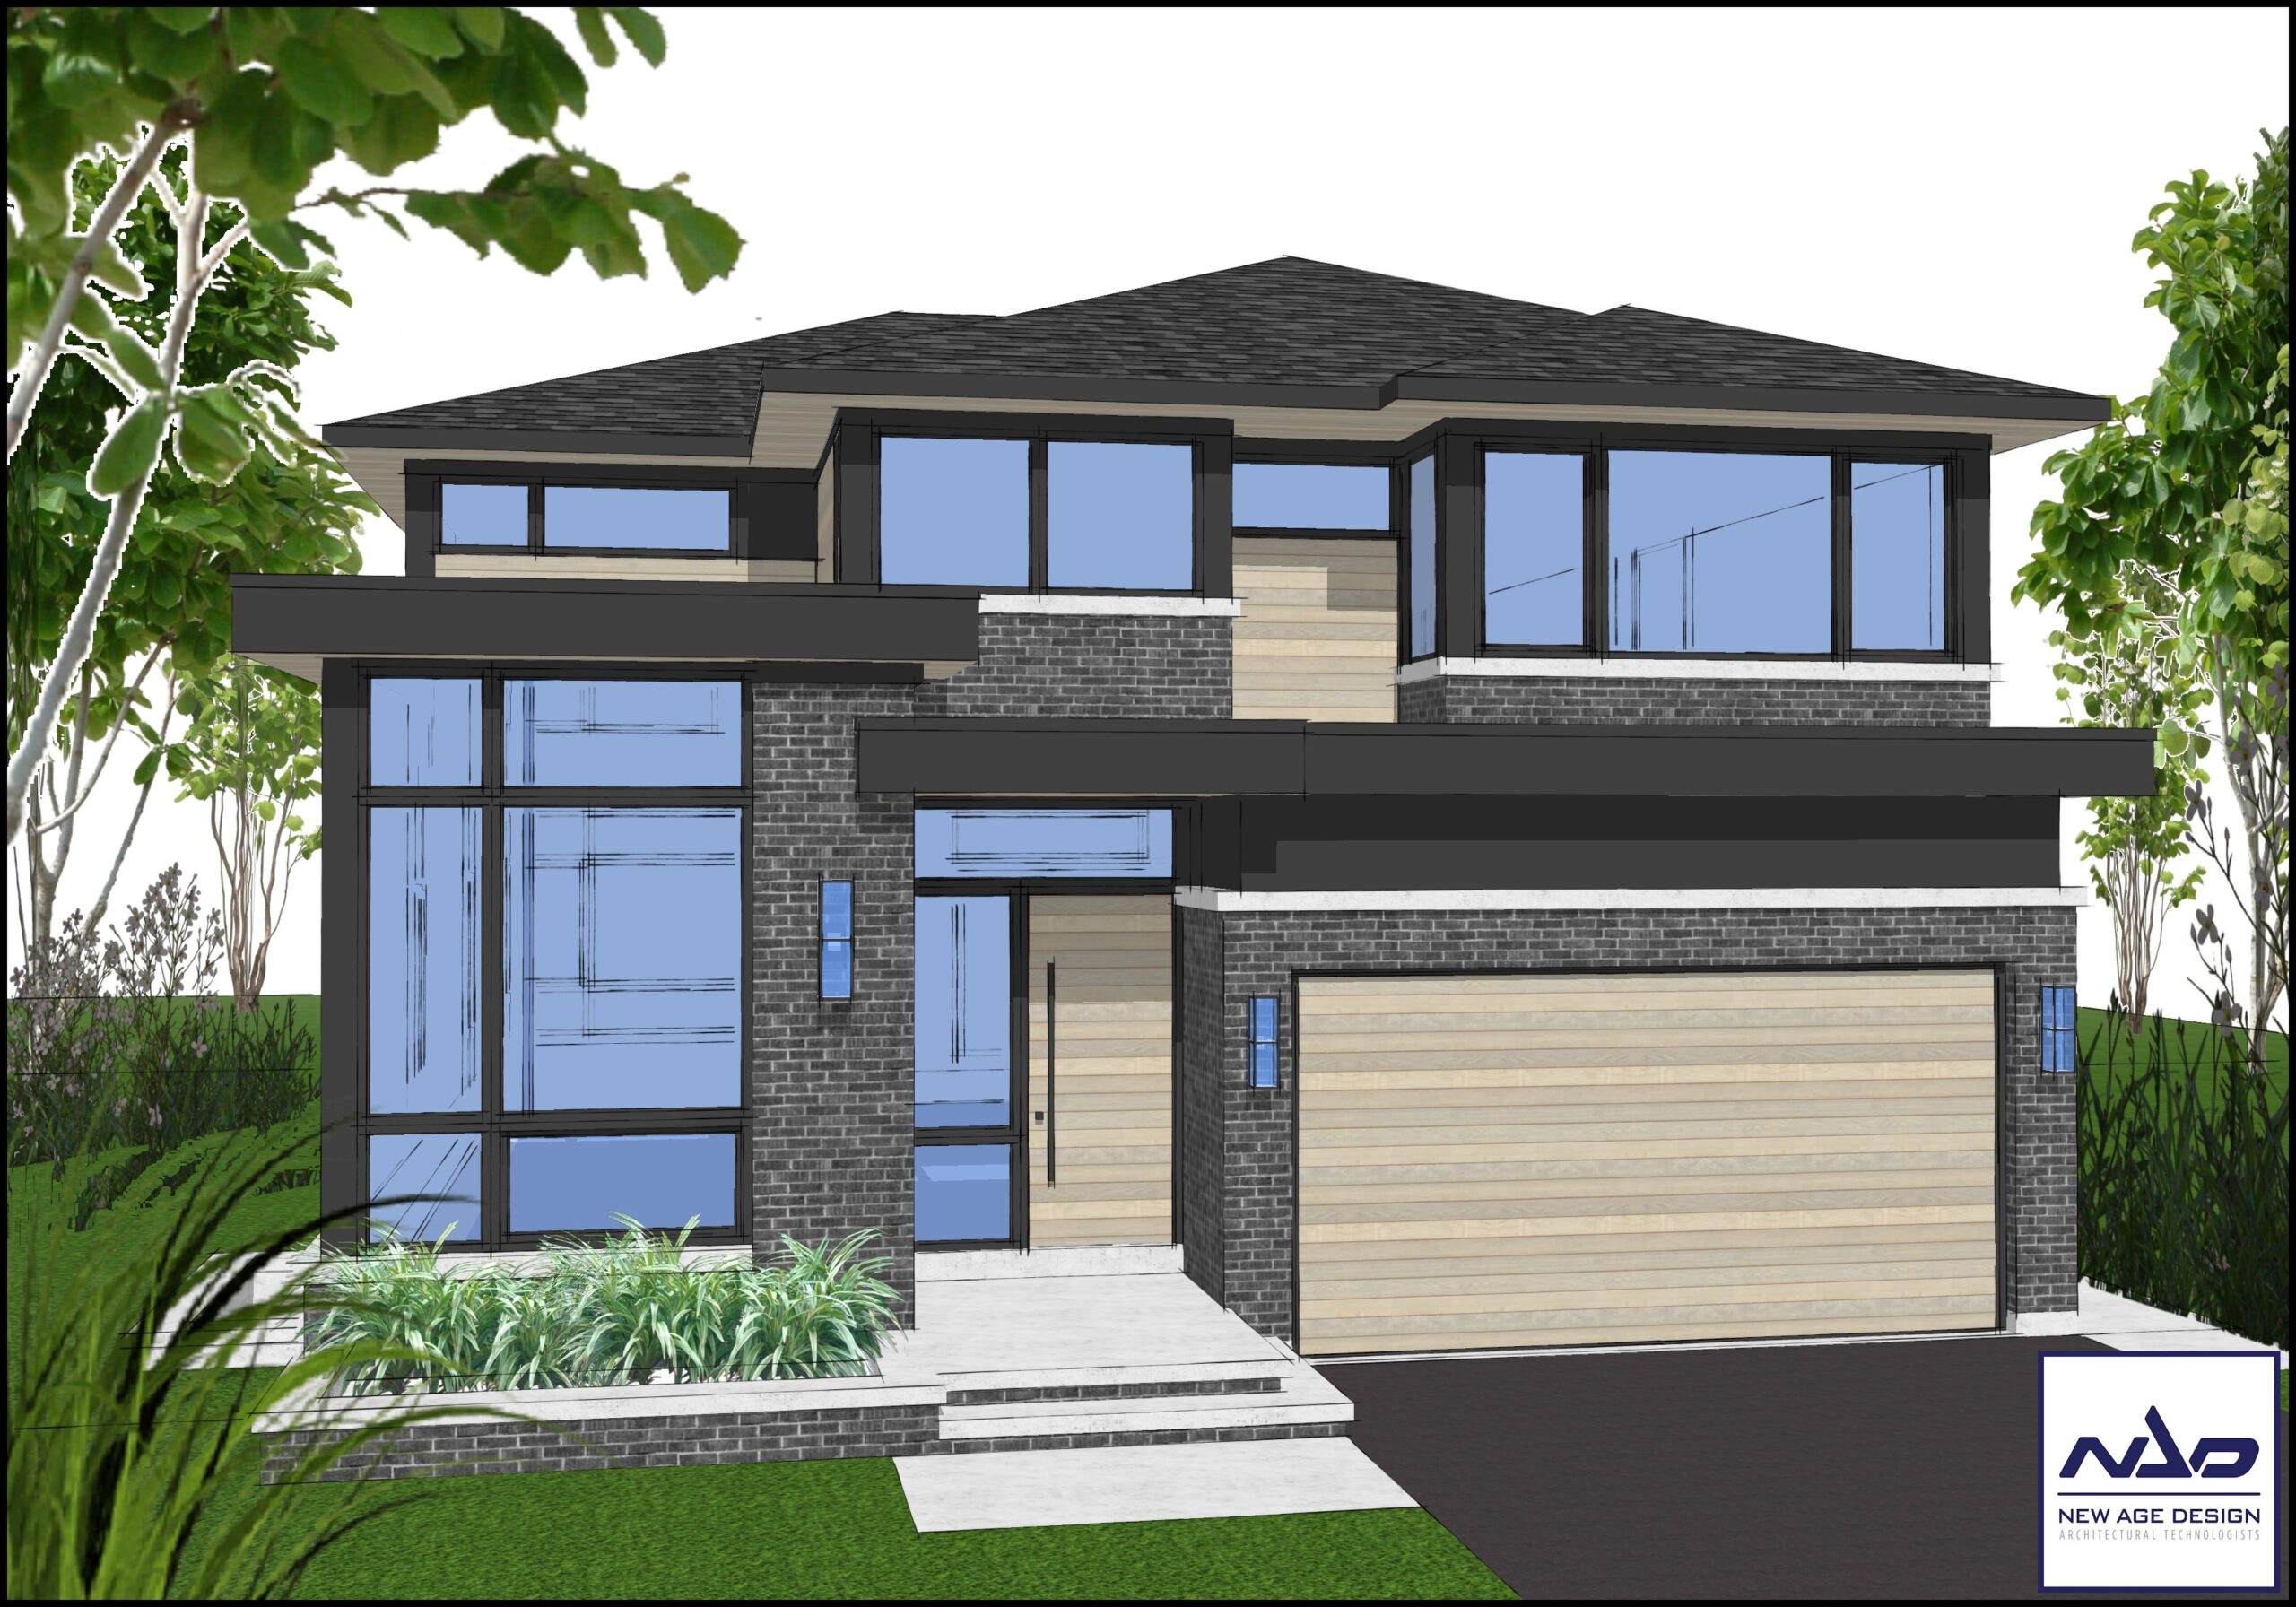 New Age Design - Mississauga Architect - Home Design - 2126-1